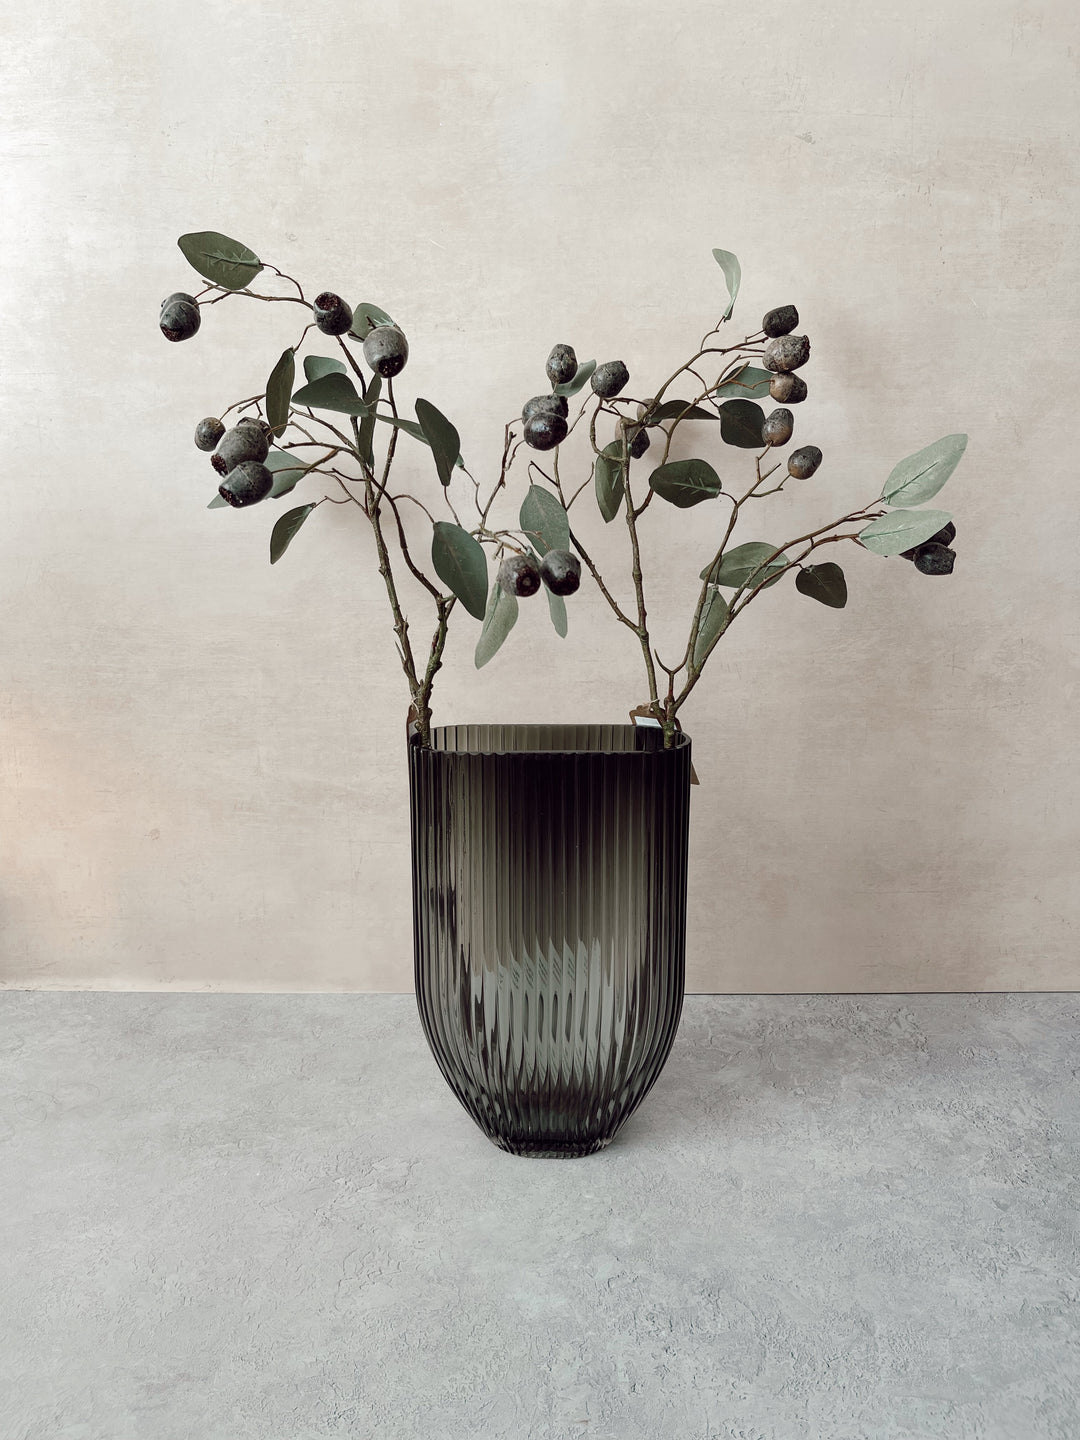 Ribbed Smoke Grey Glass Vase